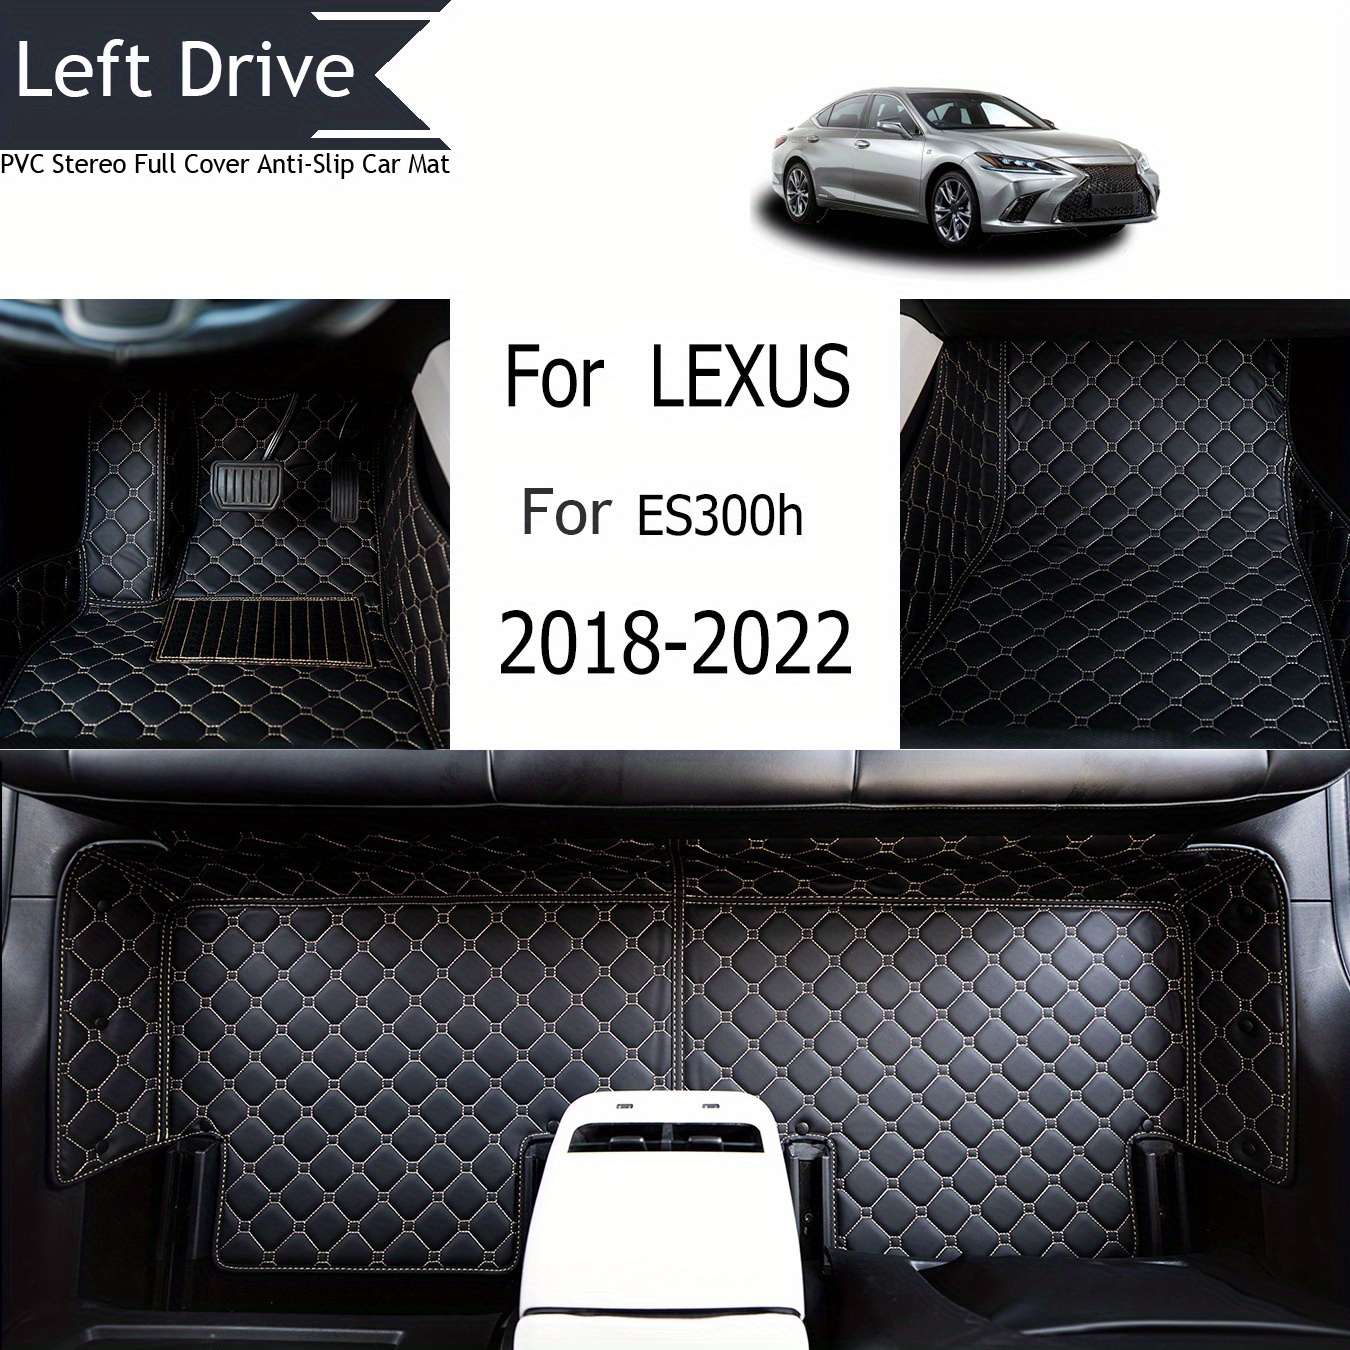 

Tegart [lhd]for Lexus For Es300h 2018-2022 3 Layer Pvc Stereo Full Cover Anti-slip Car Mat